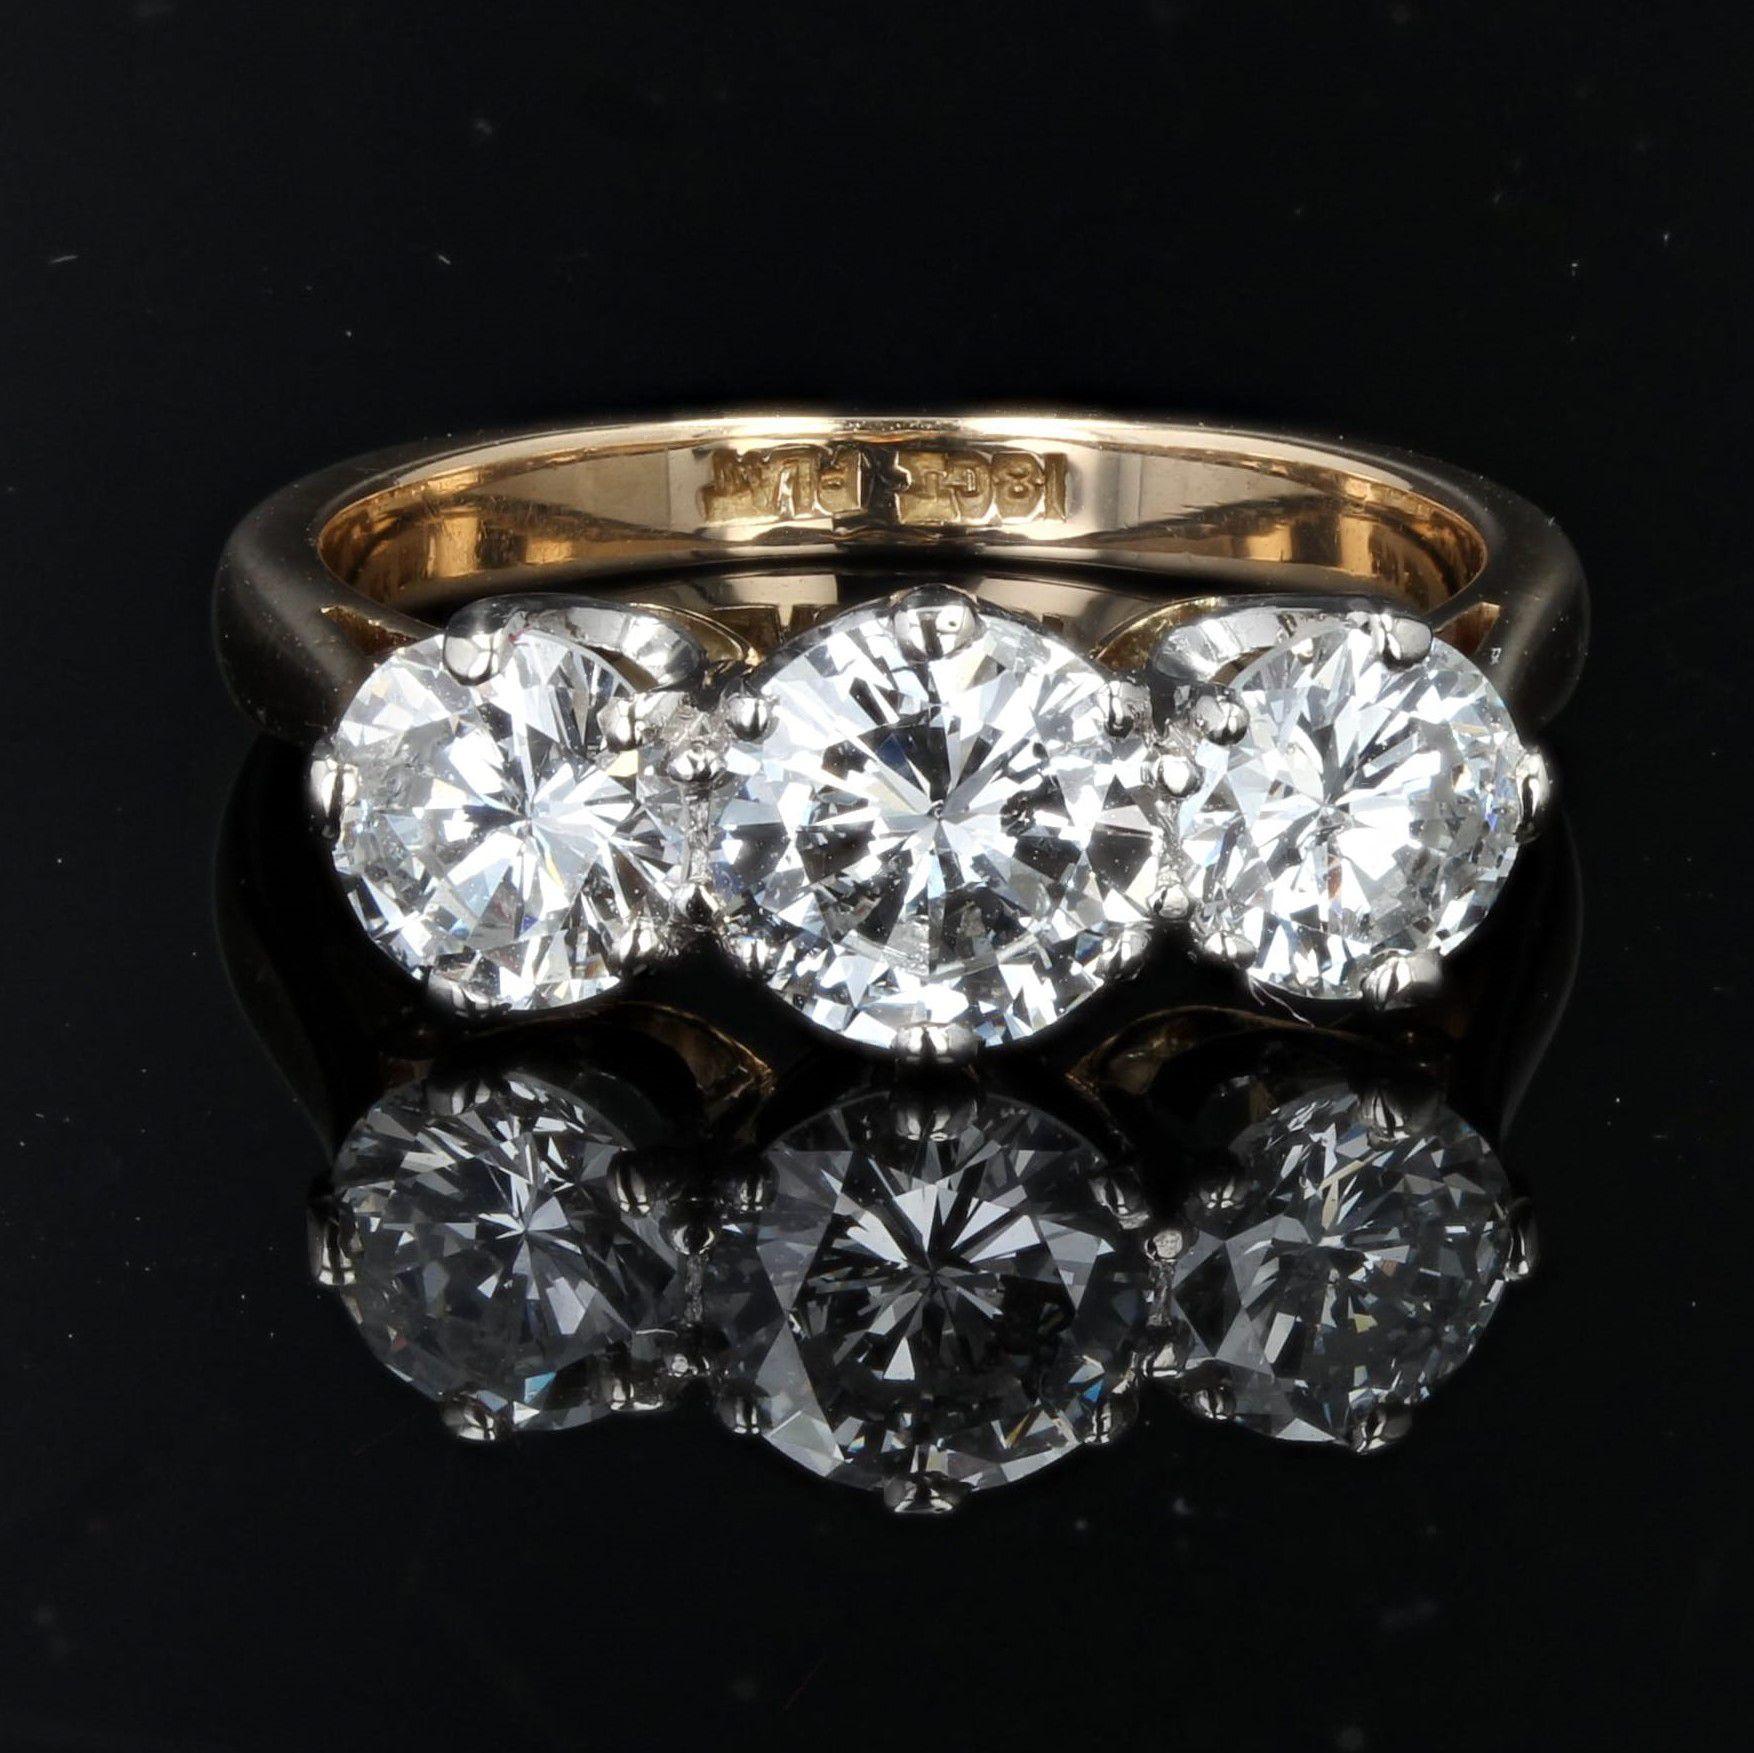 1902 gold ring